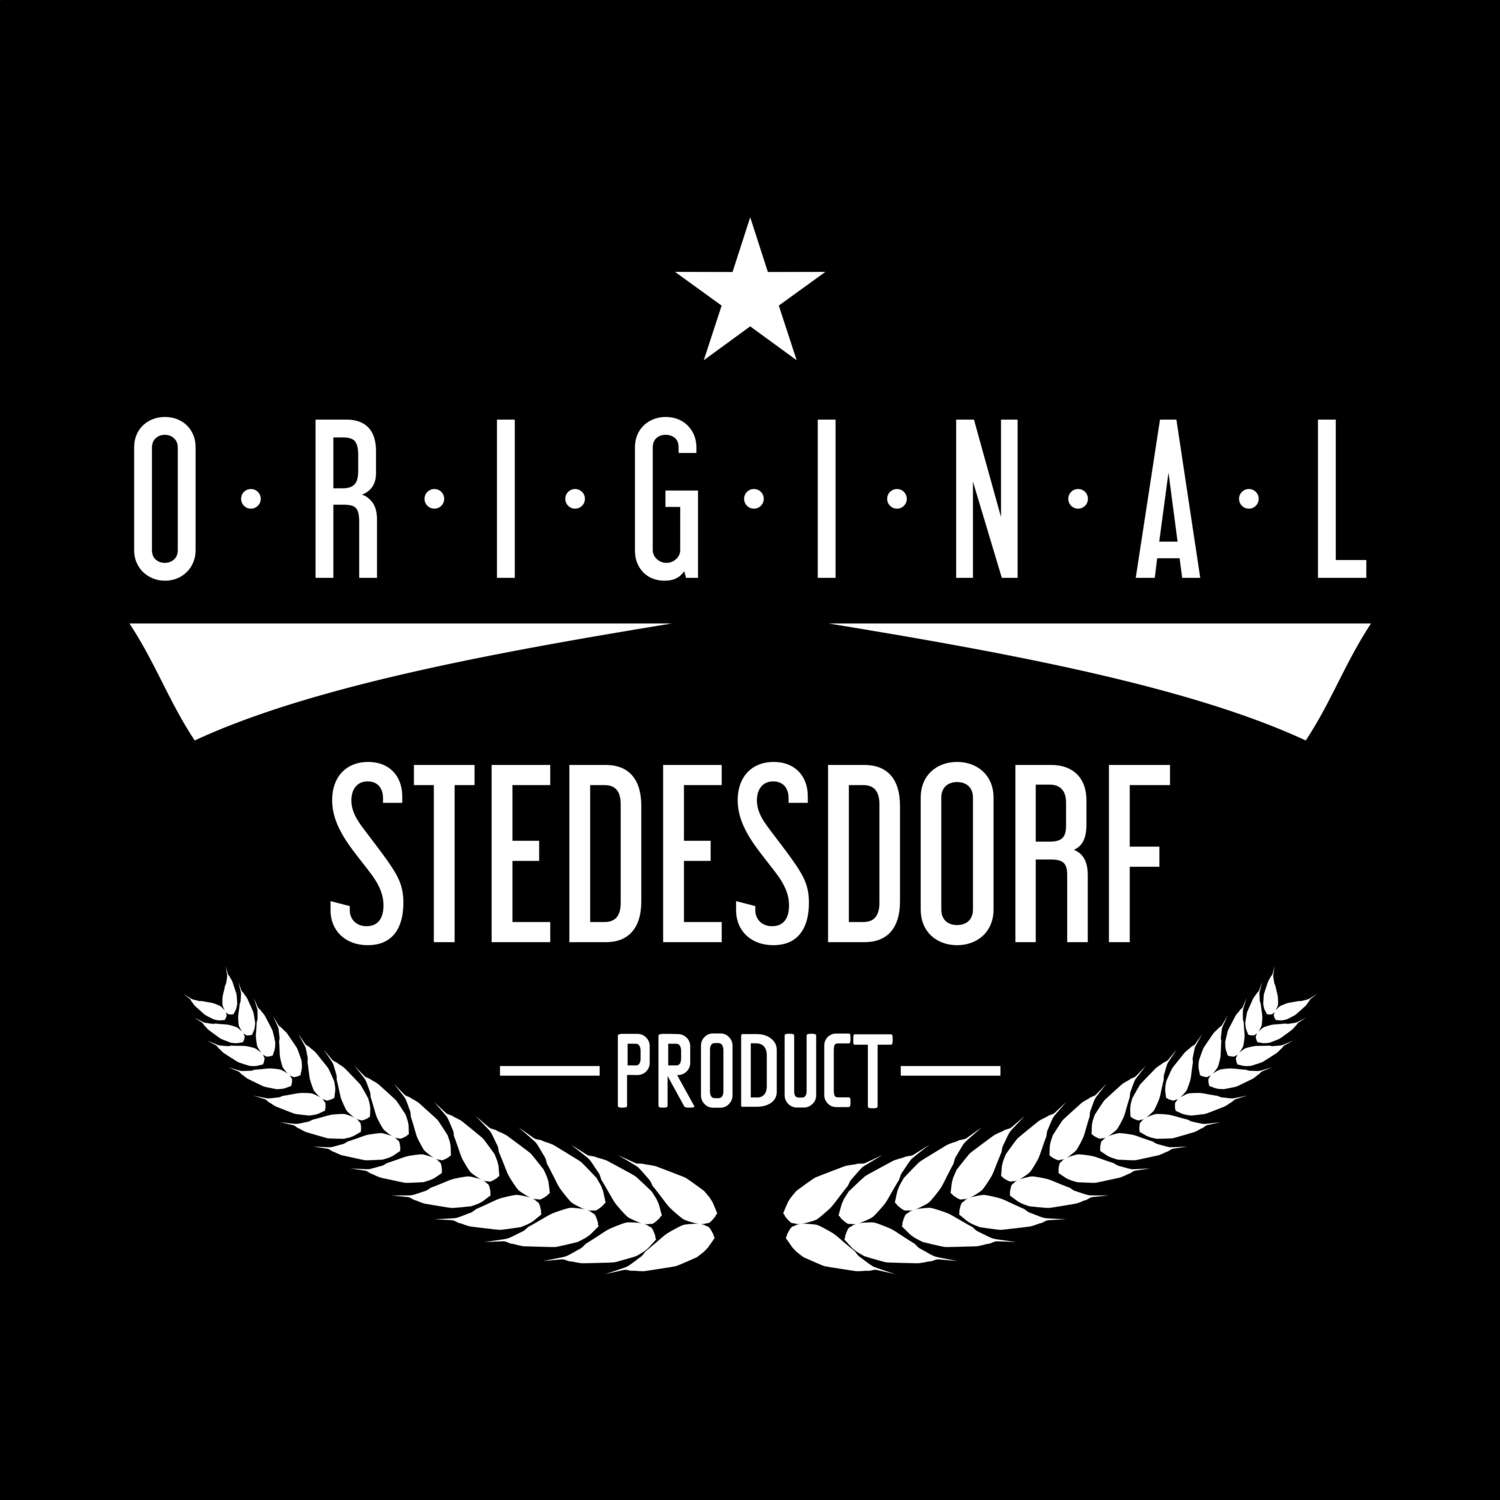 Stedesdorf T-Shirt »Original Product«